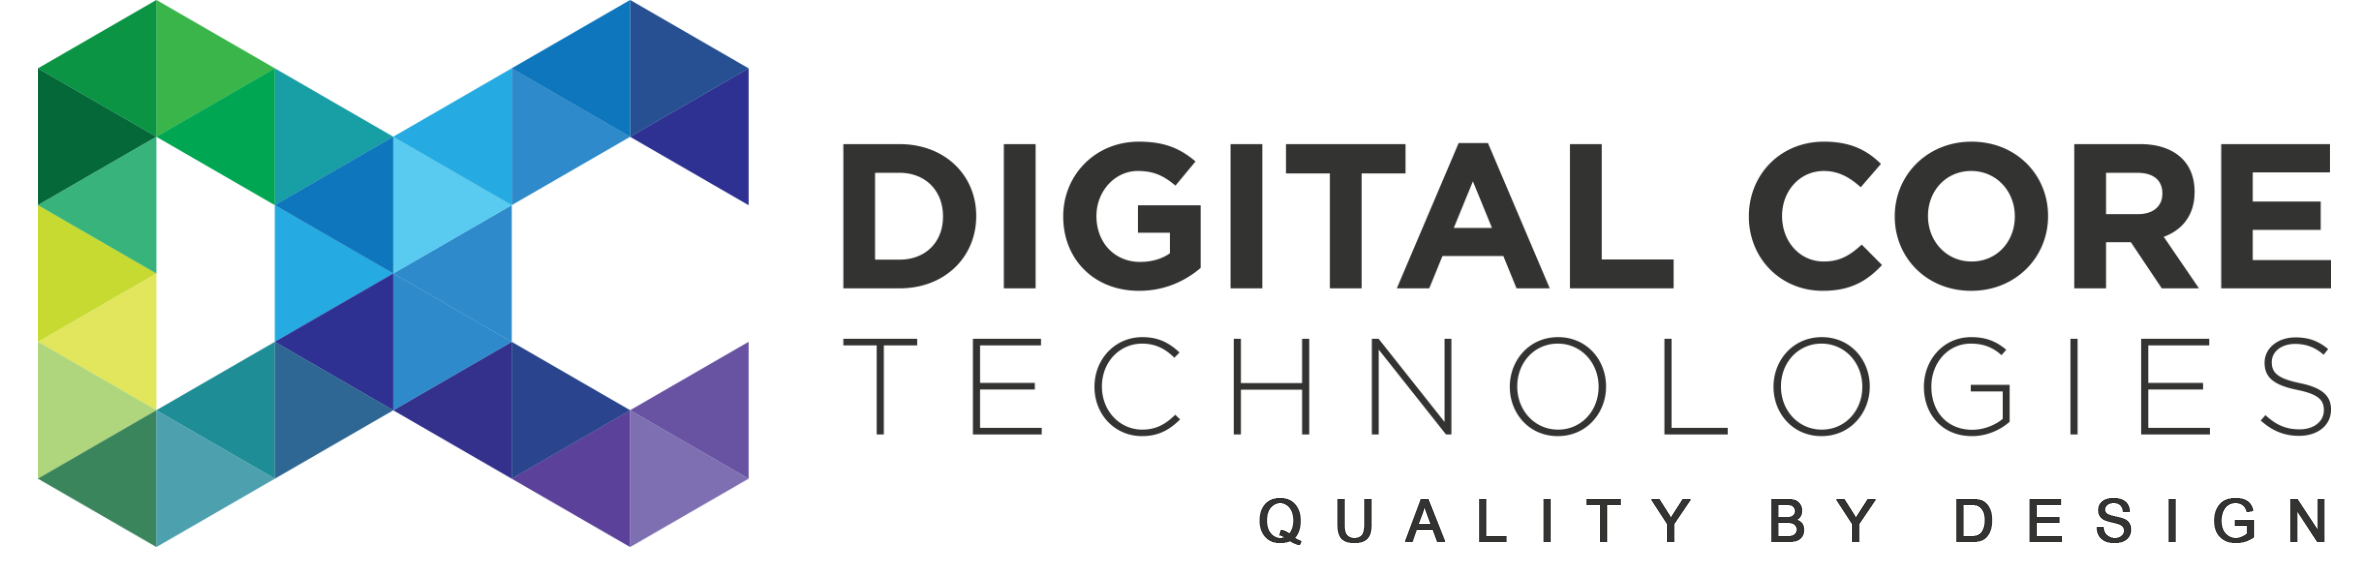 Digitalcore Technologies logo